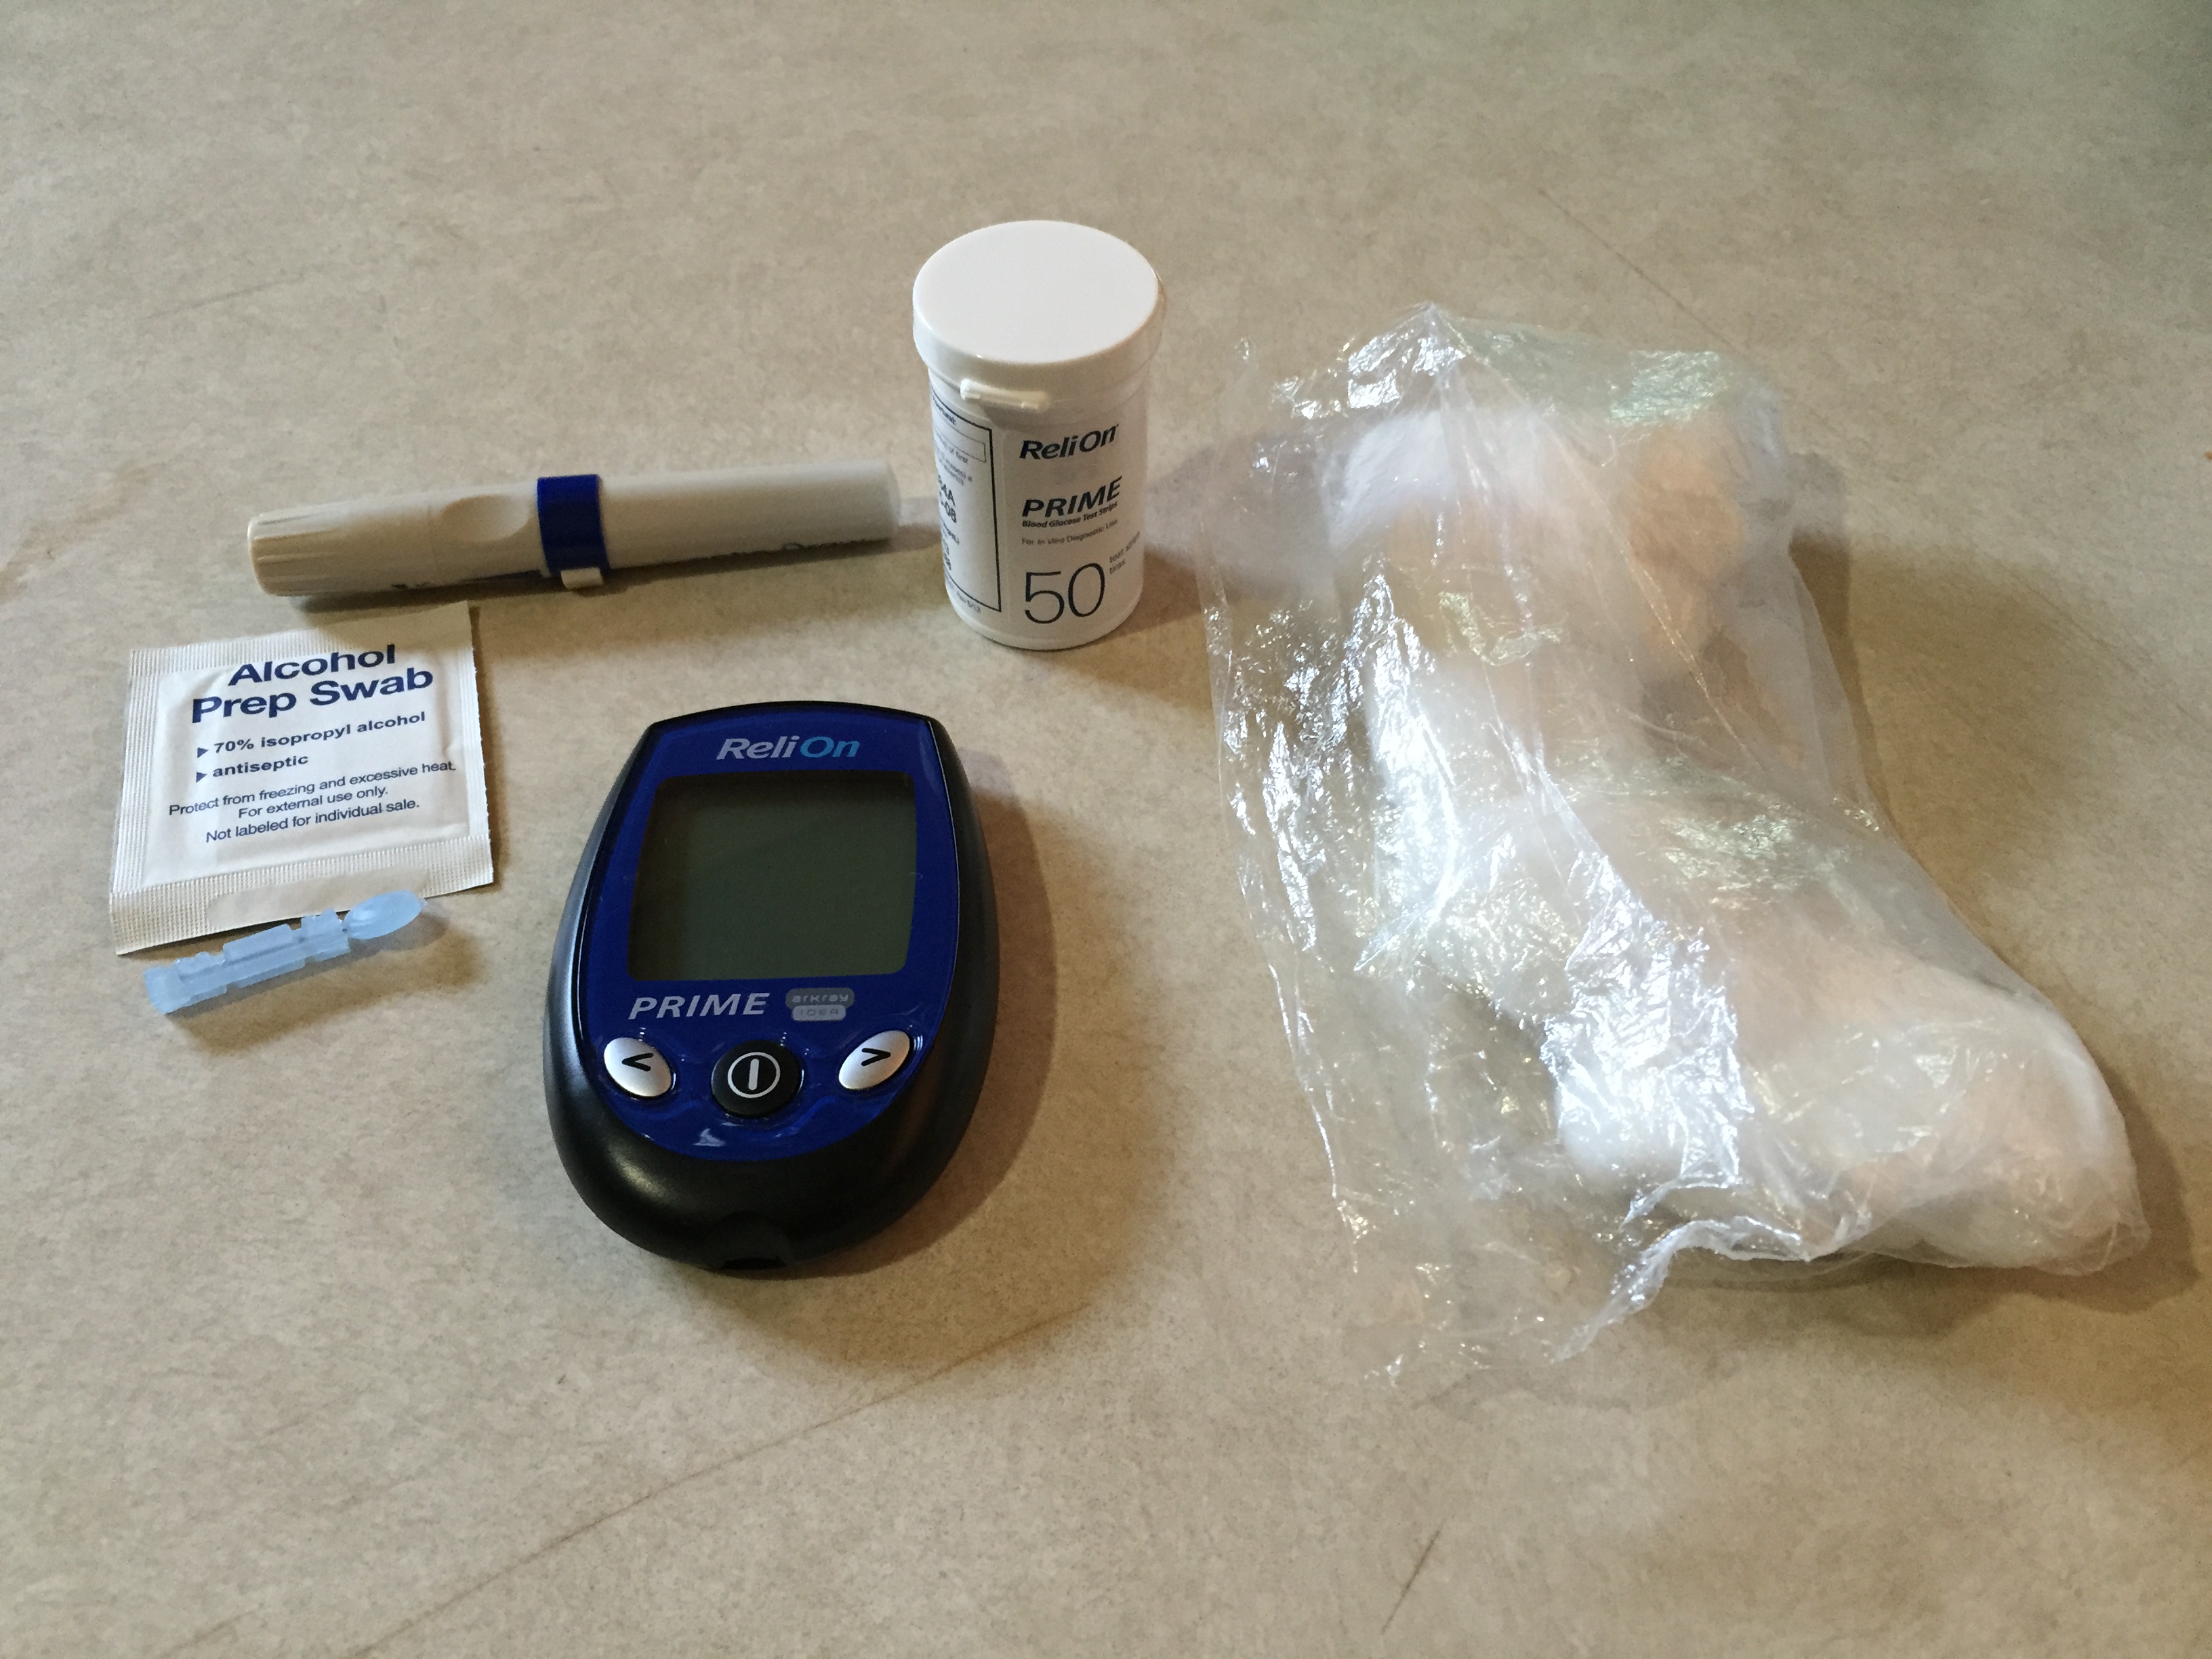 Blood Sugar Kit for Gestational Diabetes